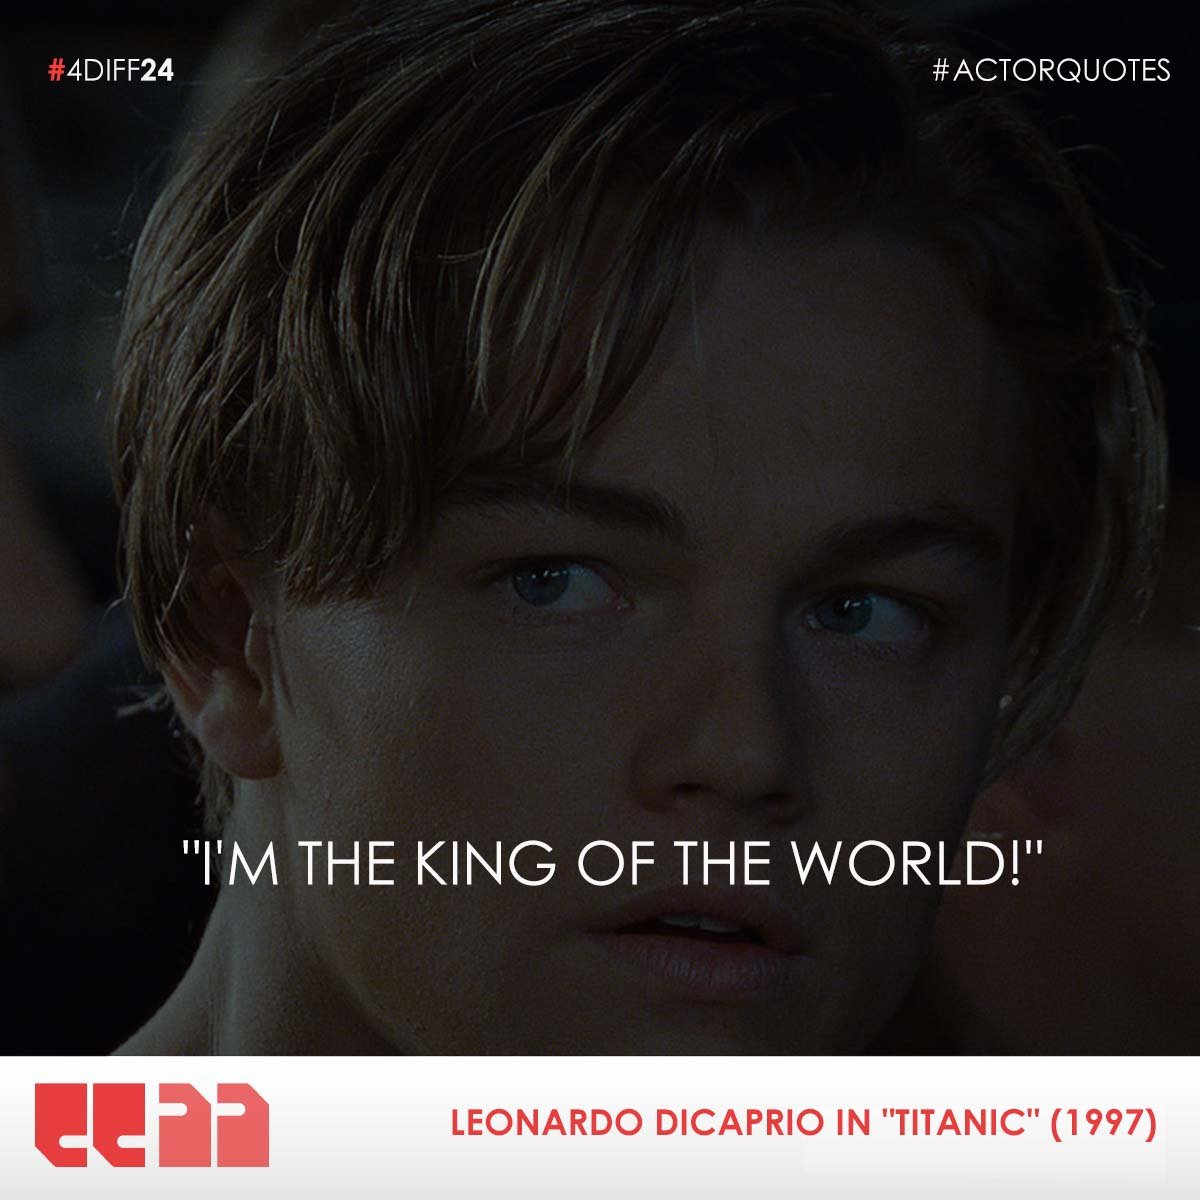 'I'm the king of the world!' - Leonardo Dicaprio

#Actor #ActorQuotes #dailyquotes #fdiff #fdiff24